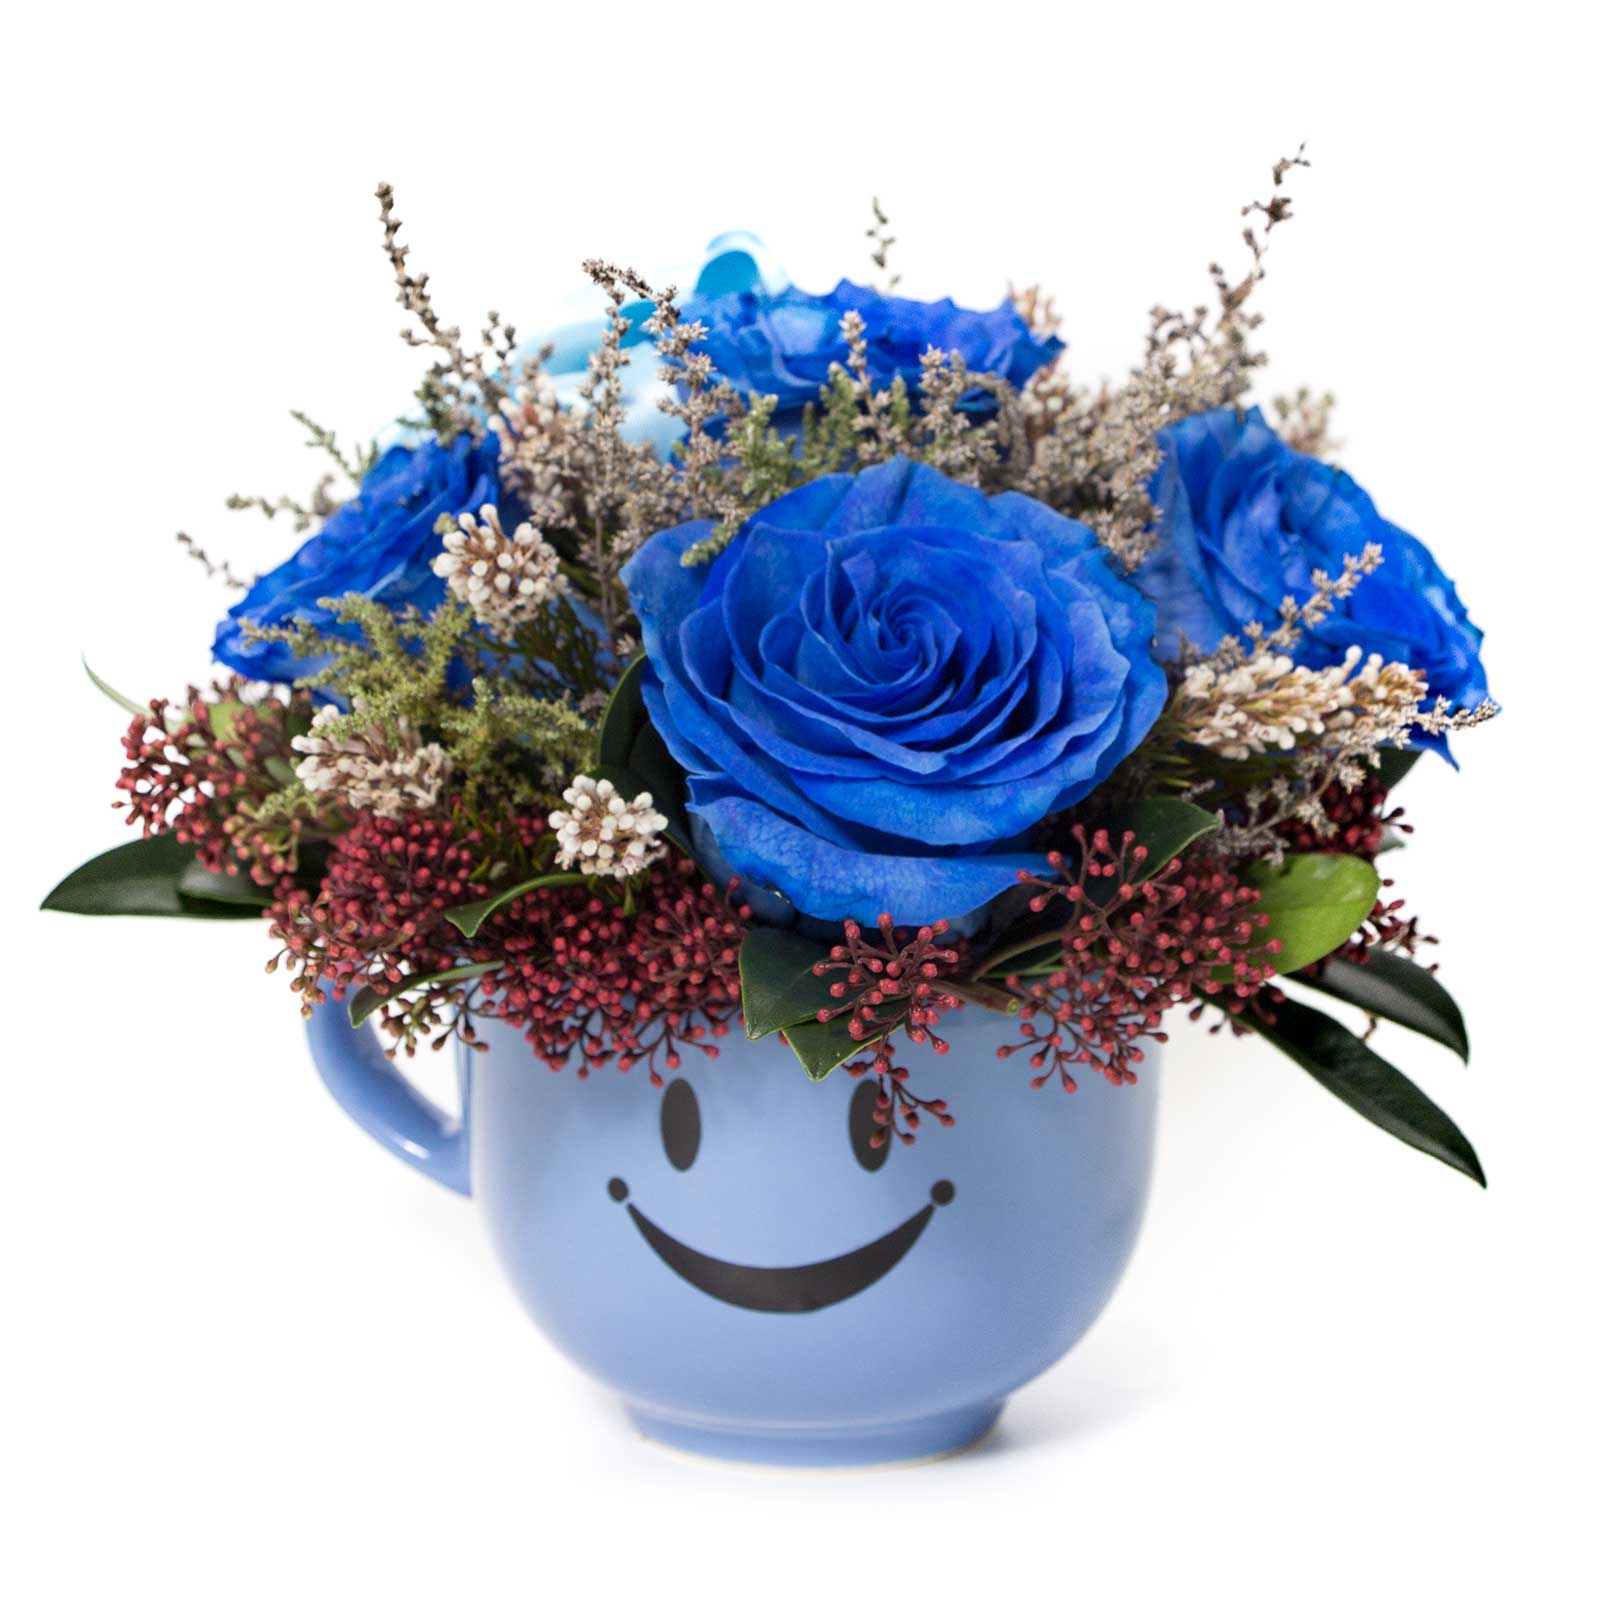 Cana Smiley trandafiri albastri